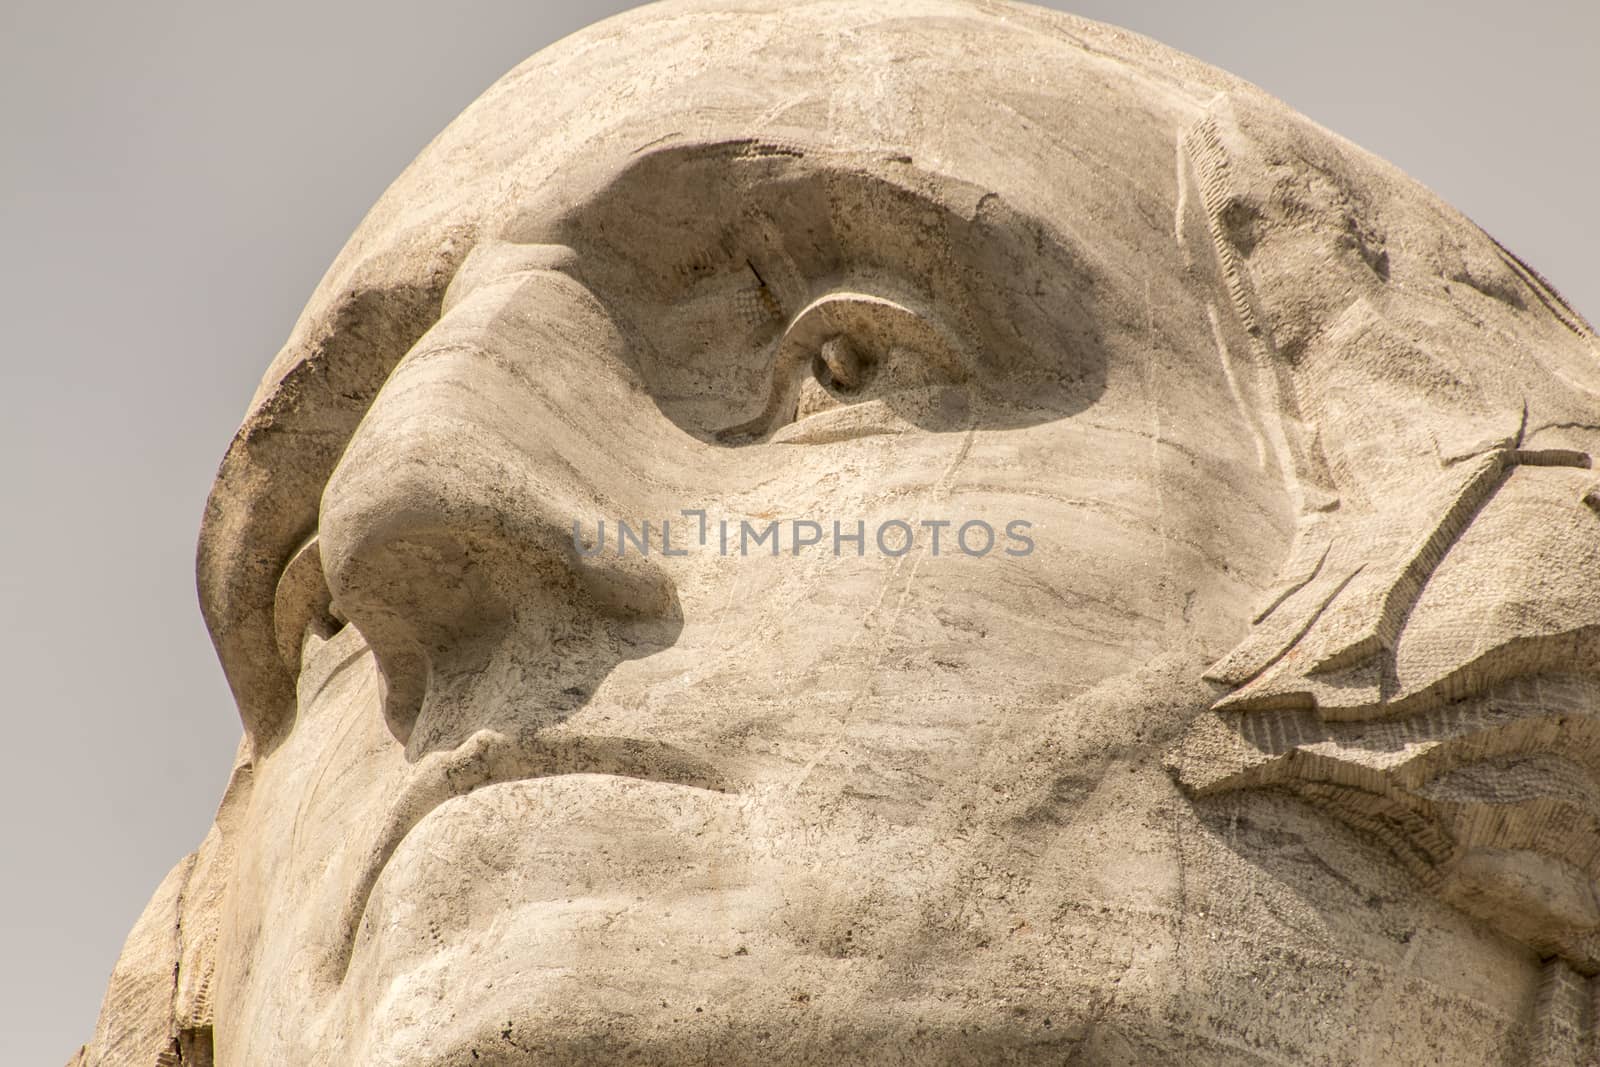 A close-up of George Washington on Mount Rushmore in South Dakota.